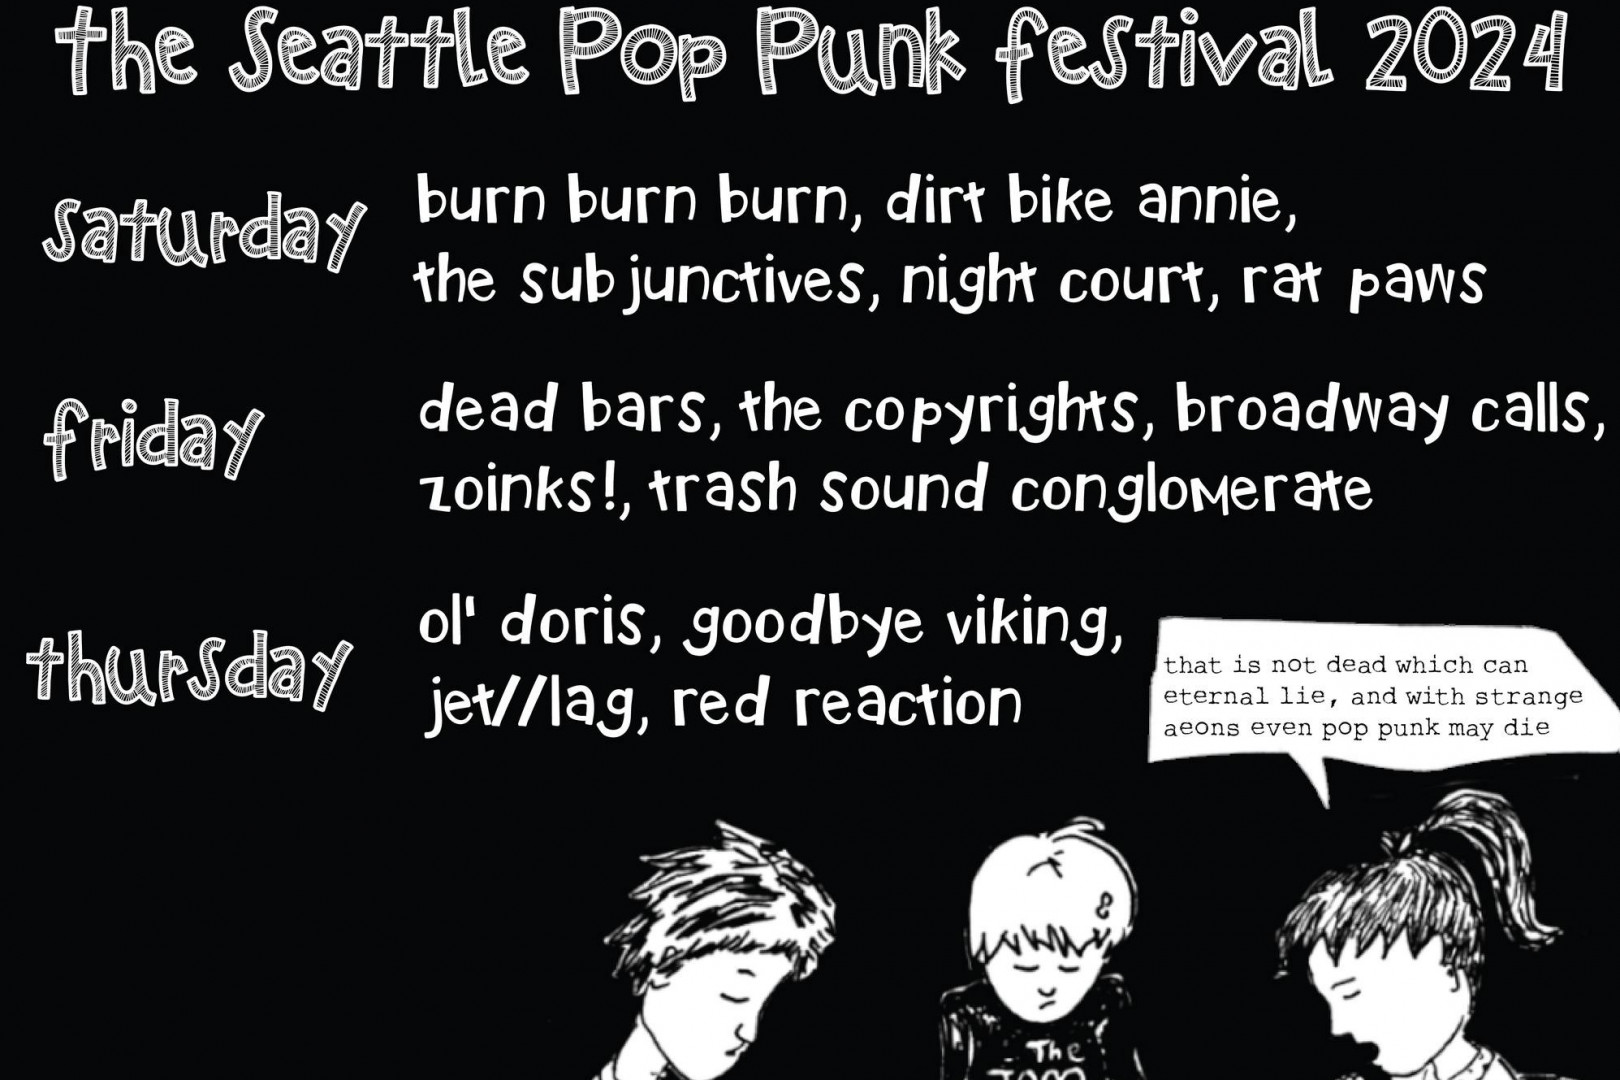 Dirt Bike Annie, Copyrights, Broadway Calls, Dead Bars to play Seattle Pop Punk Festival 2024